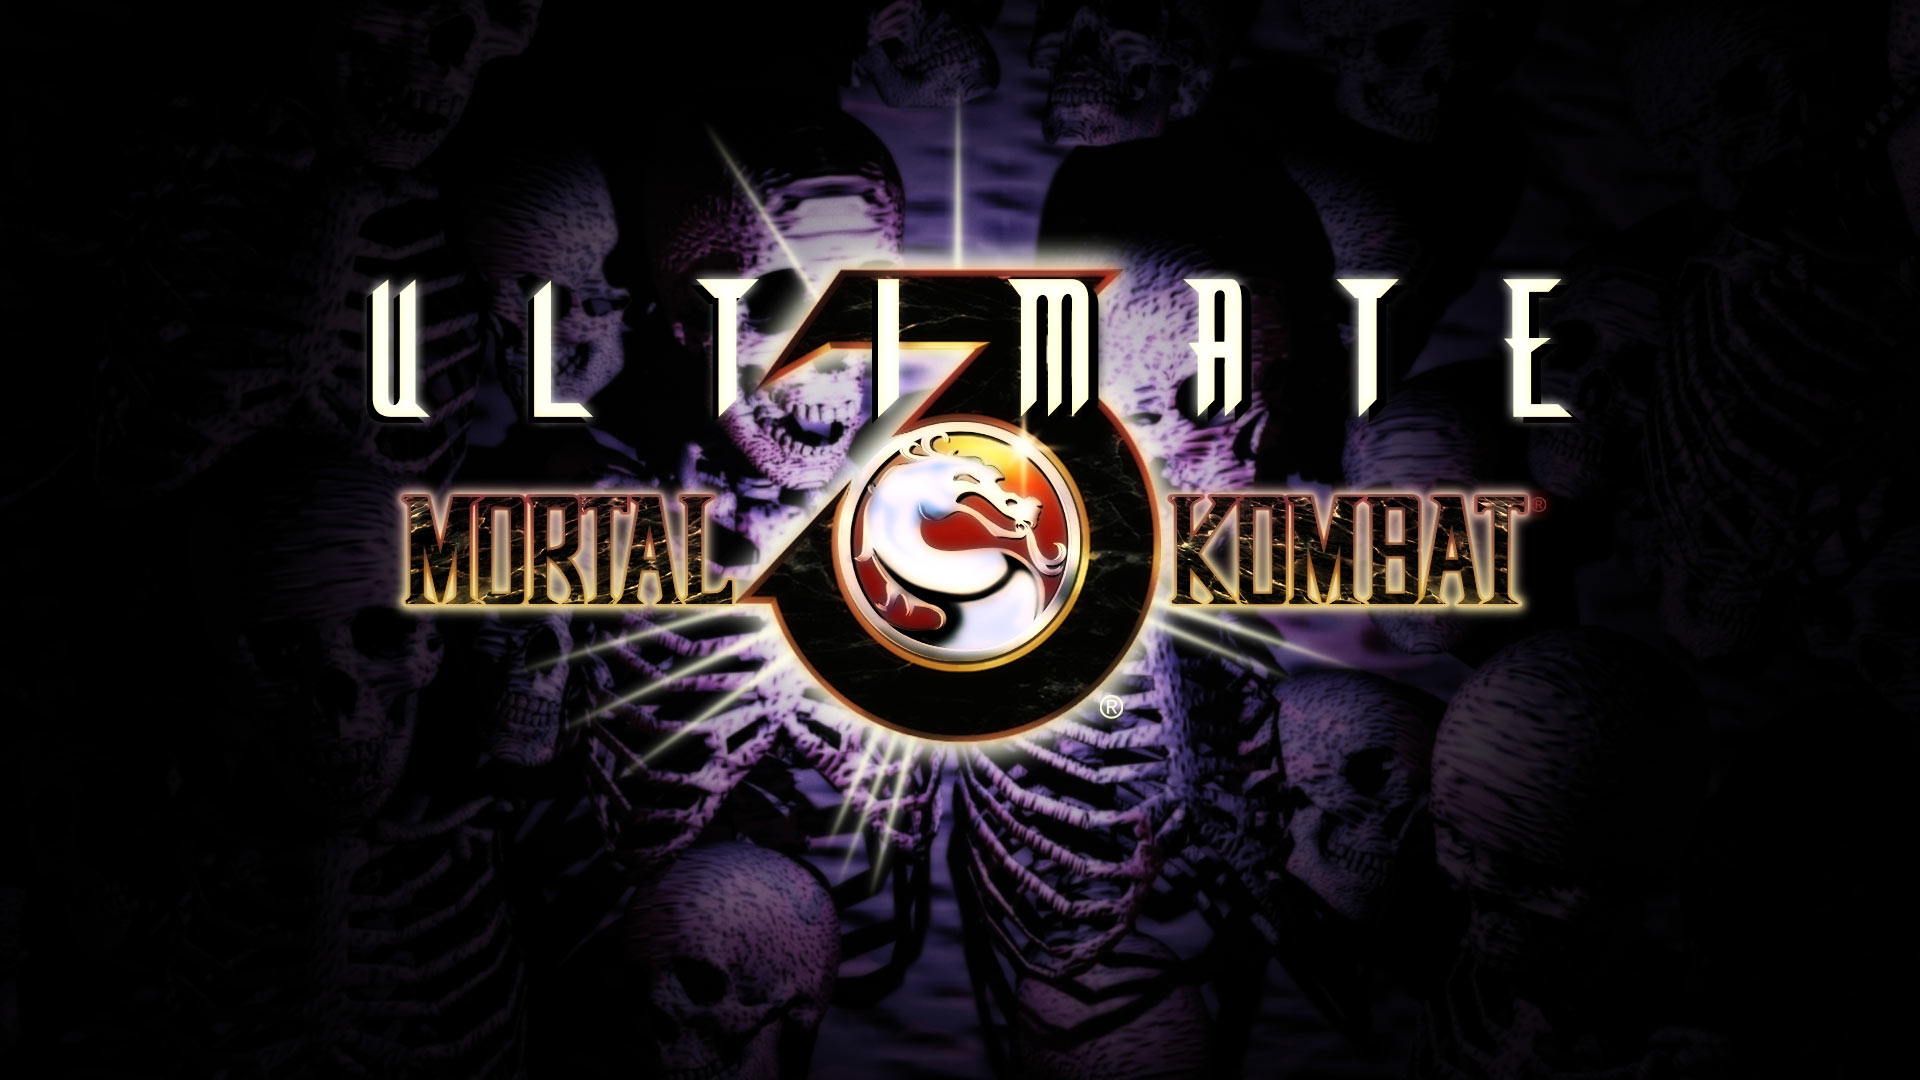 download mortal kombat kombat pack 3